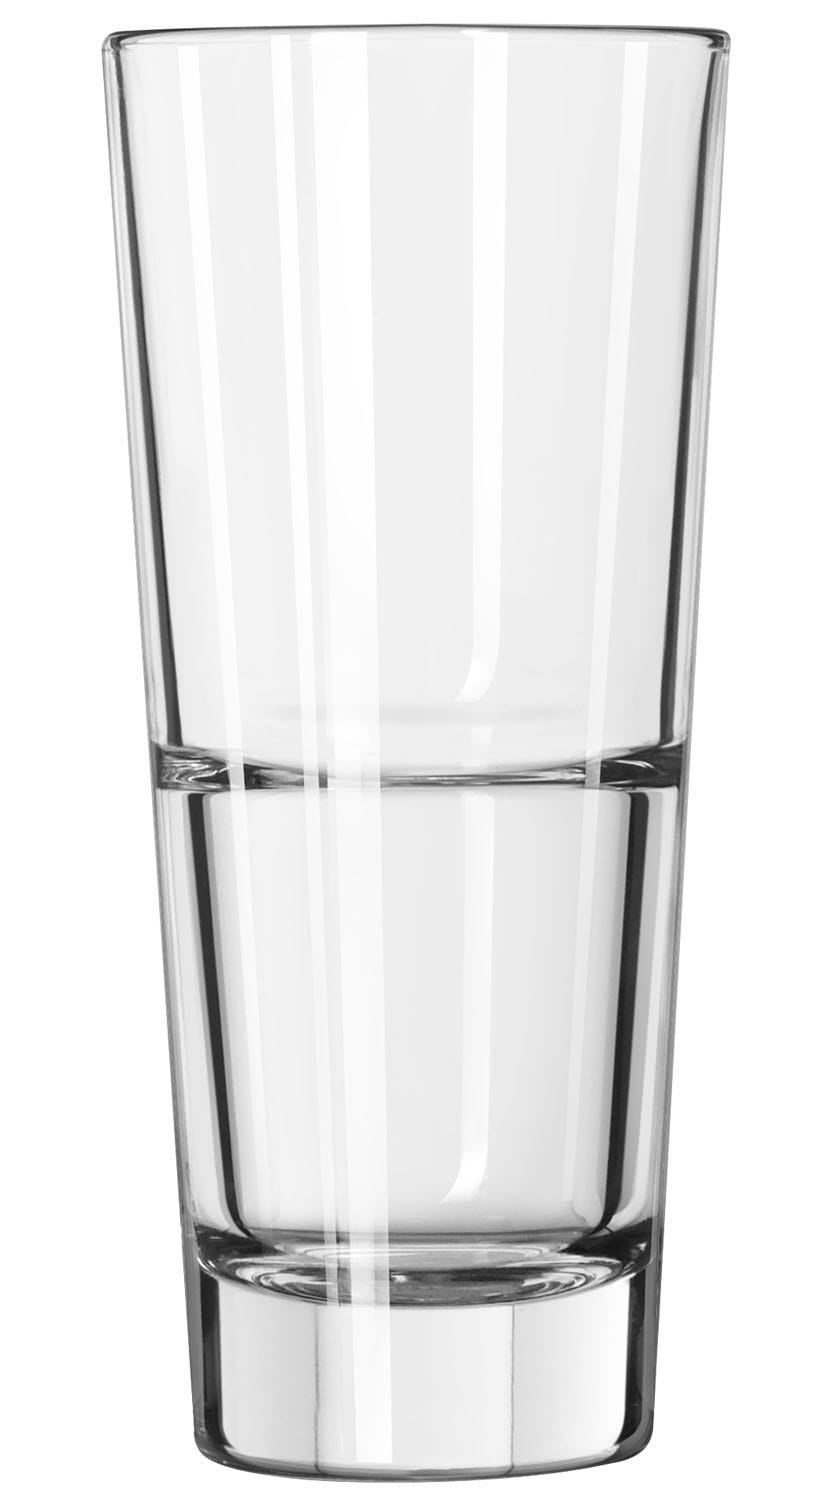 Libbey 8430 Citation Gourmet 14.75 Oz. Margarita Glass - 12 / CS